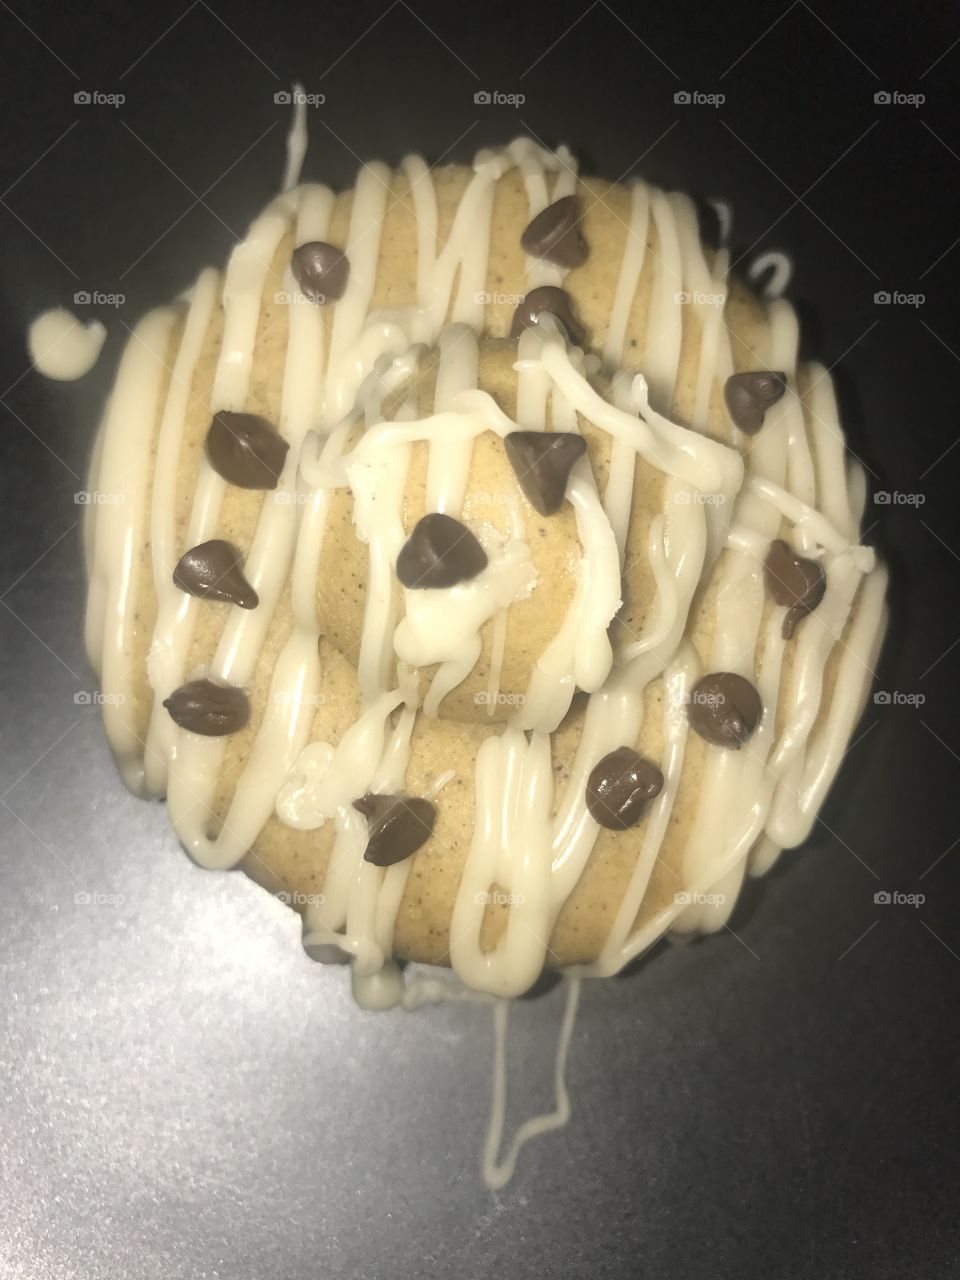 Chocolate chip protein donut